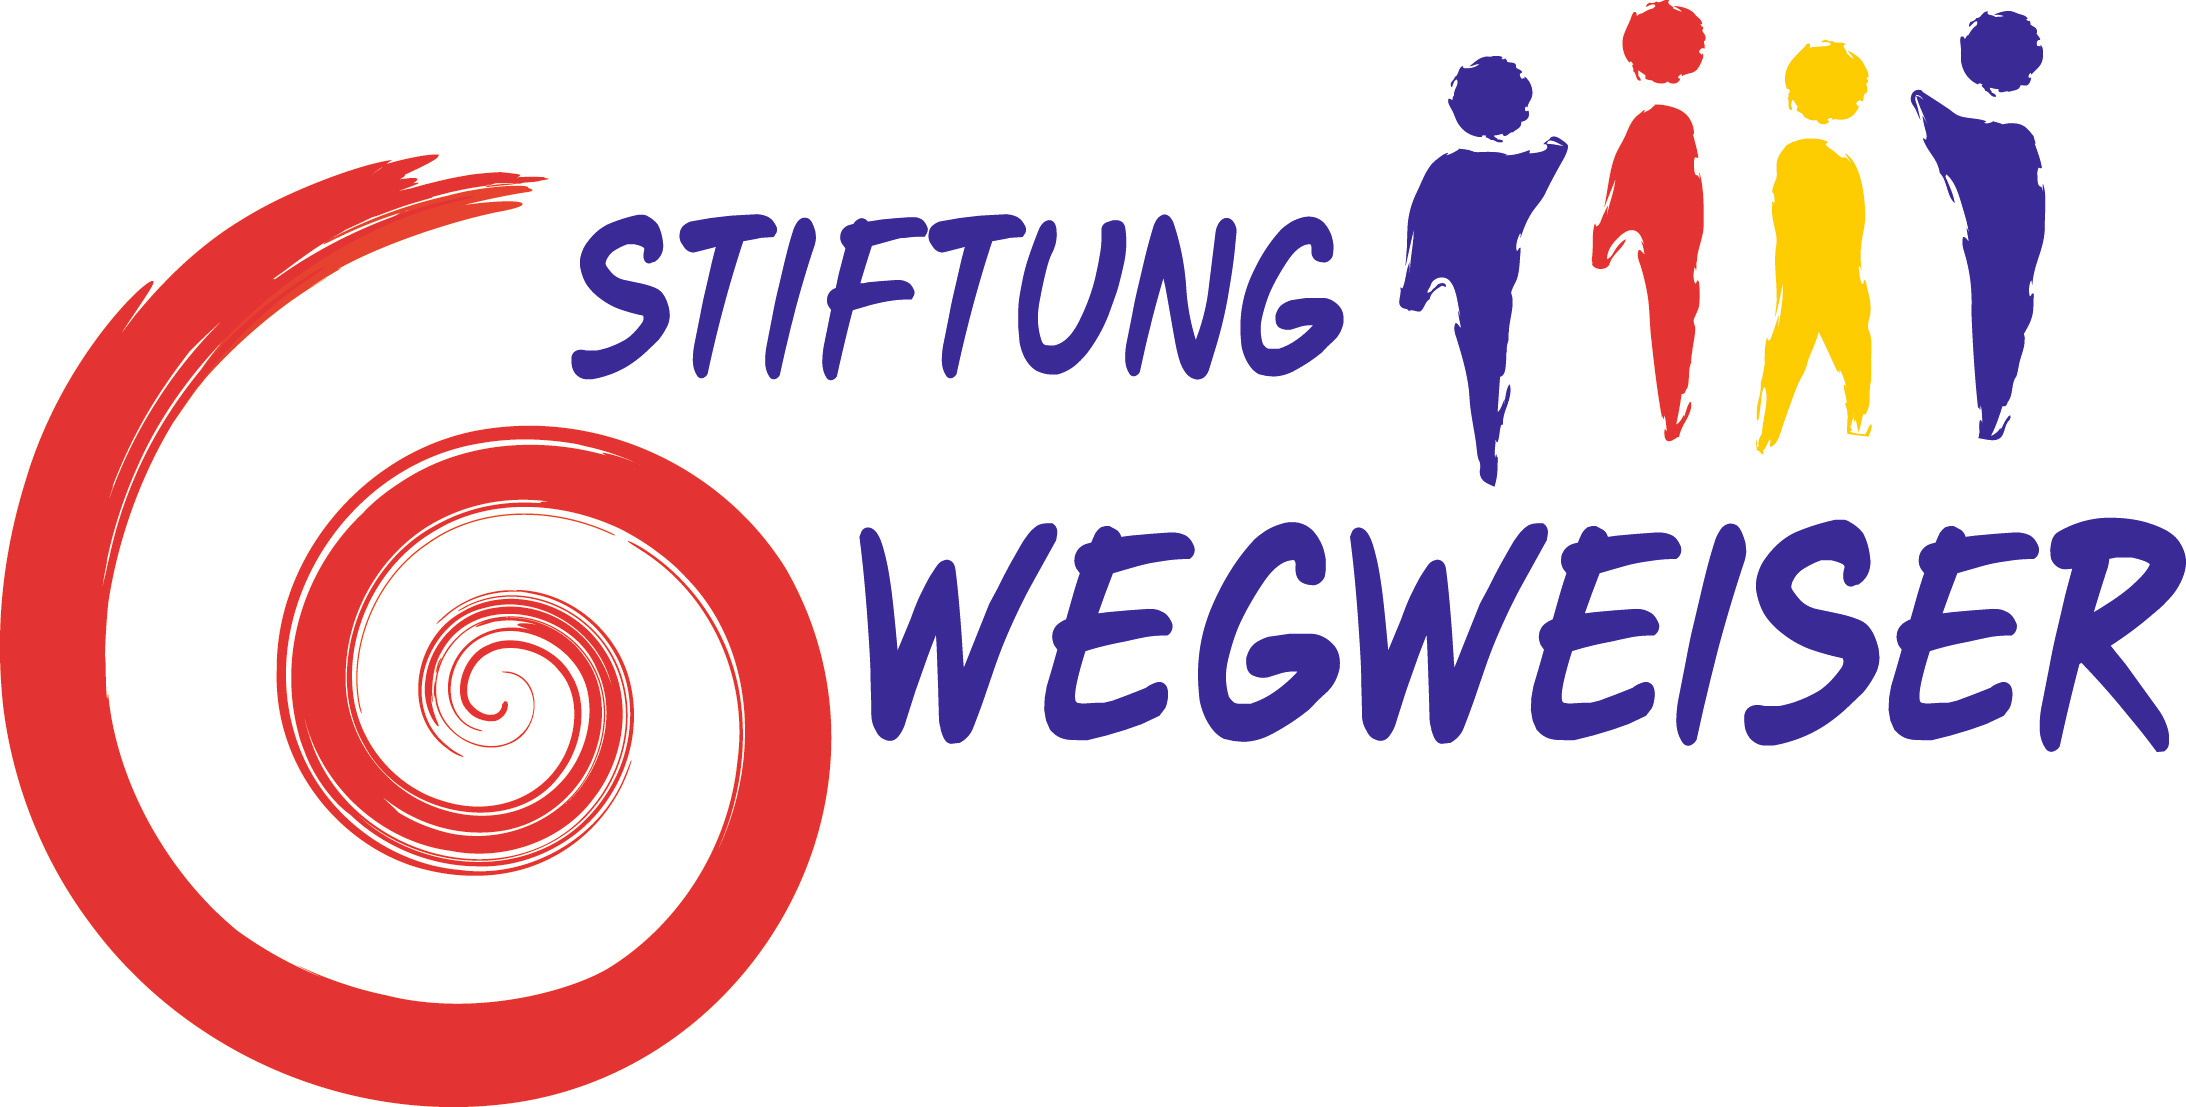 Stiftung Wegweiser